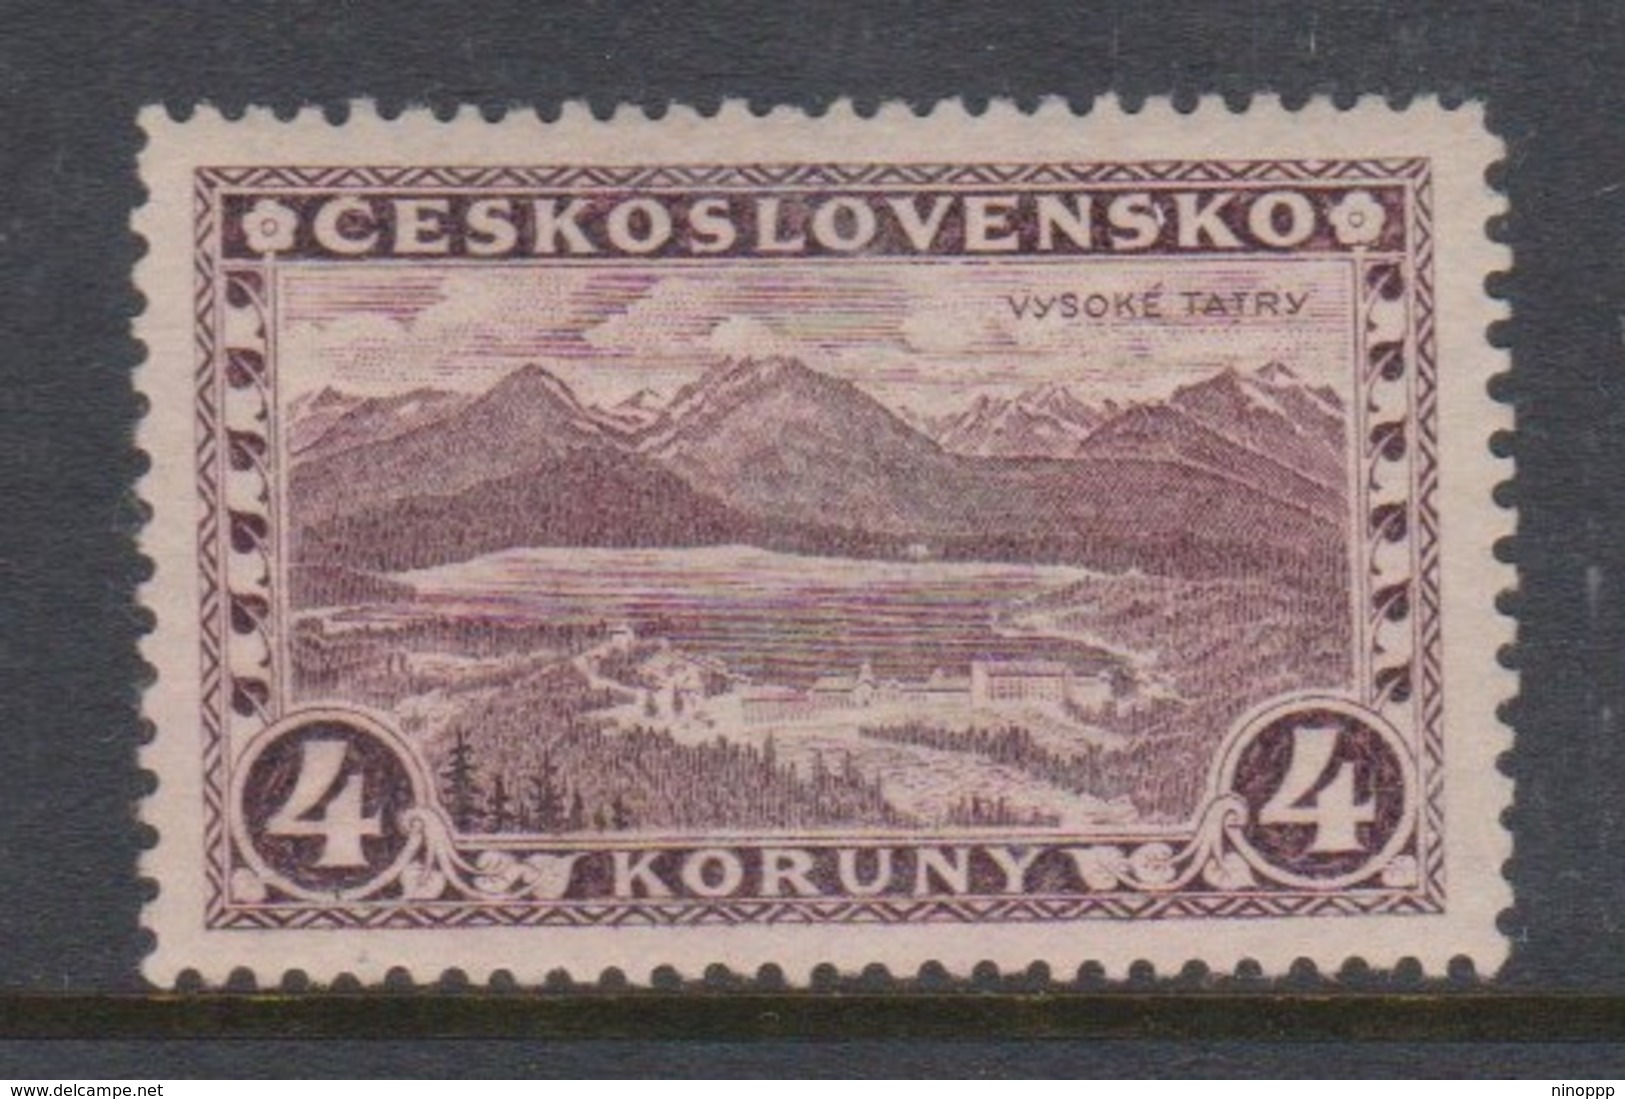 Czechoslovakia SG 276 1928 Great Tatra,4k Purple No Wtmk,mint Hinged - Used Stamps